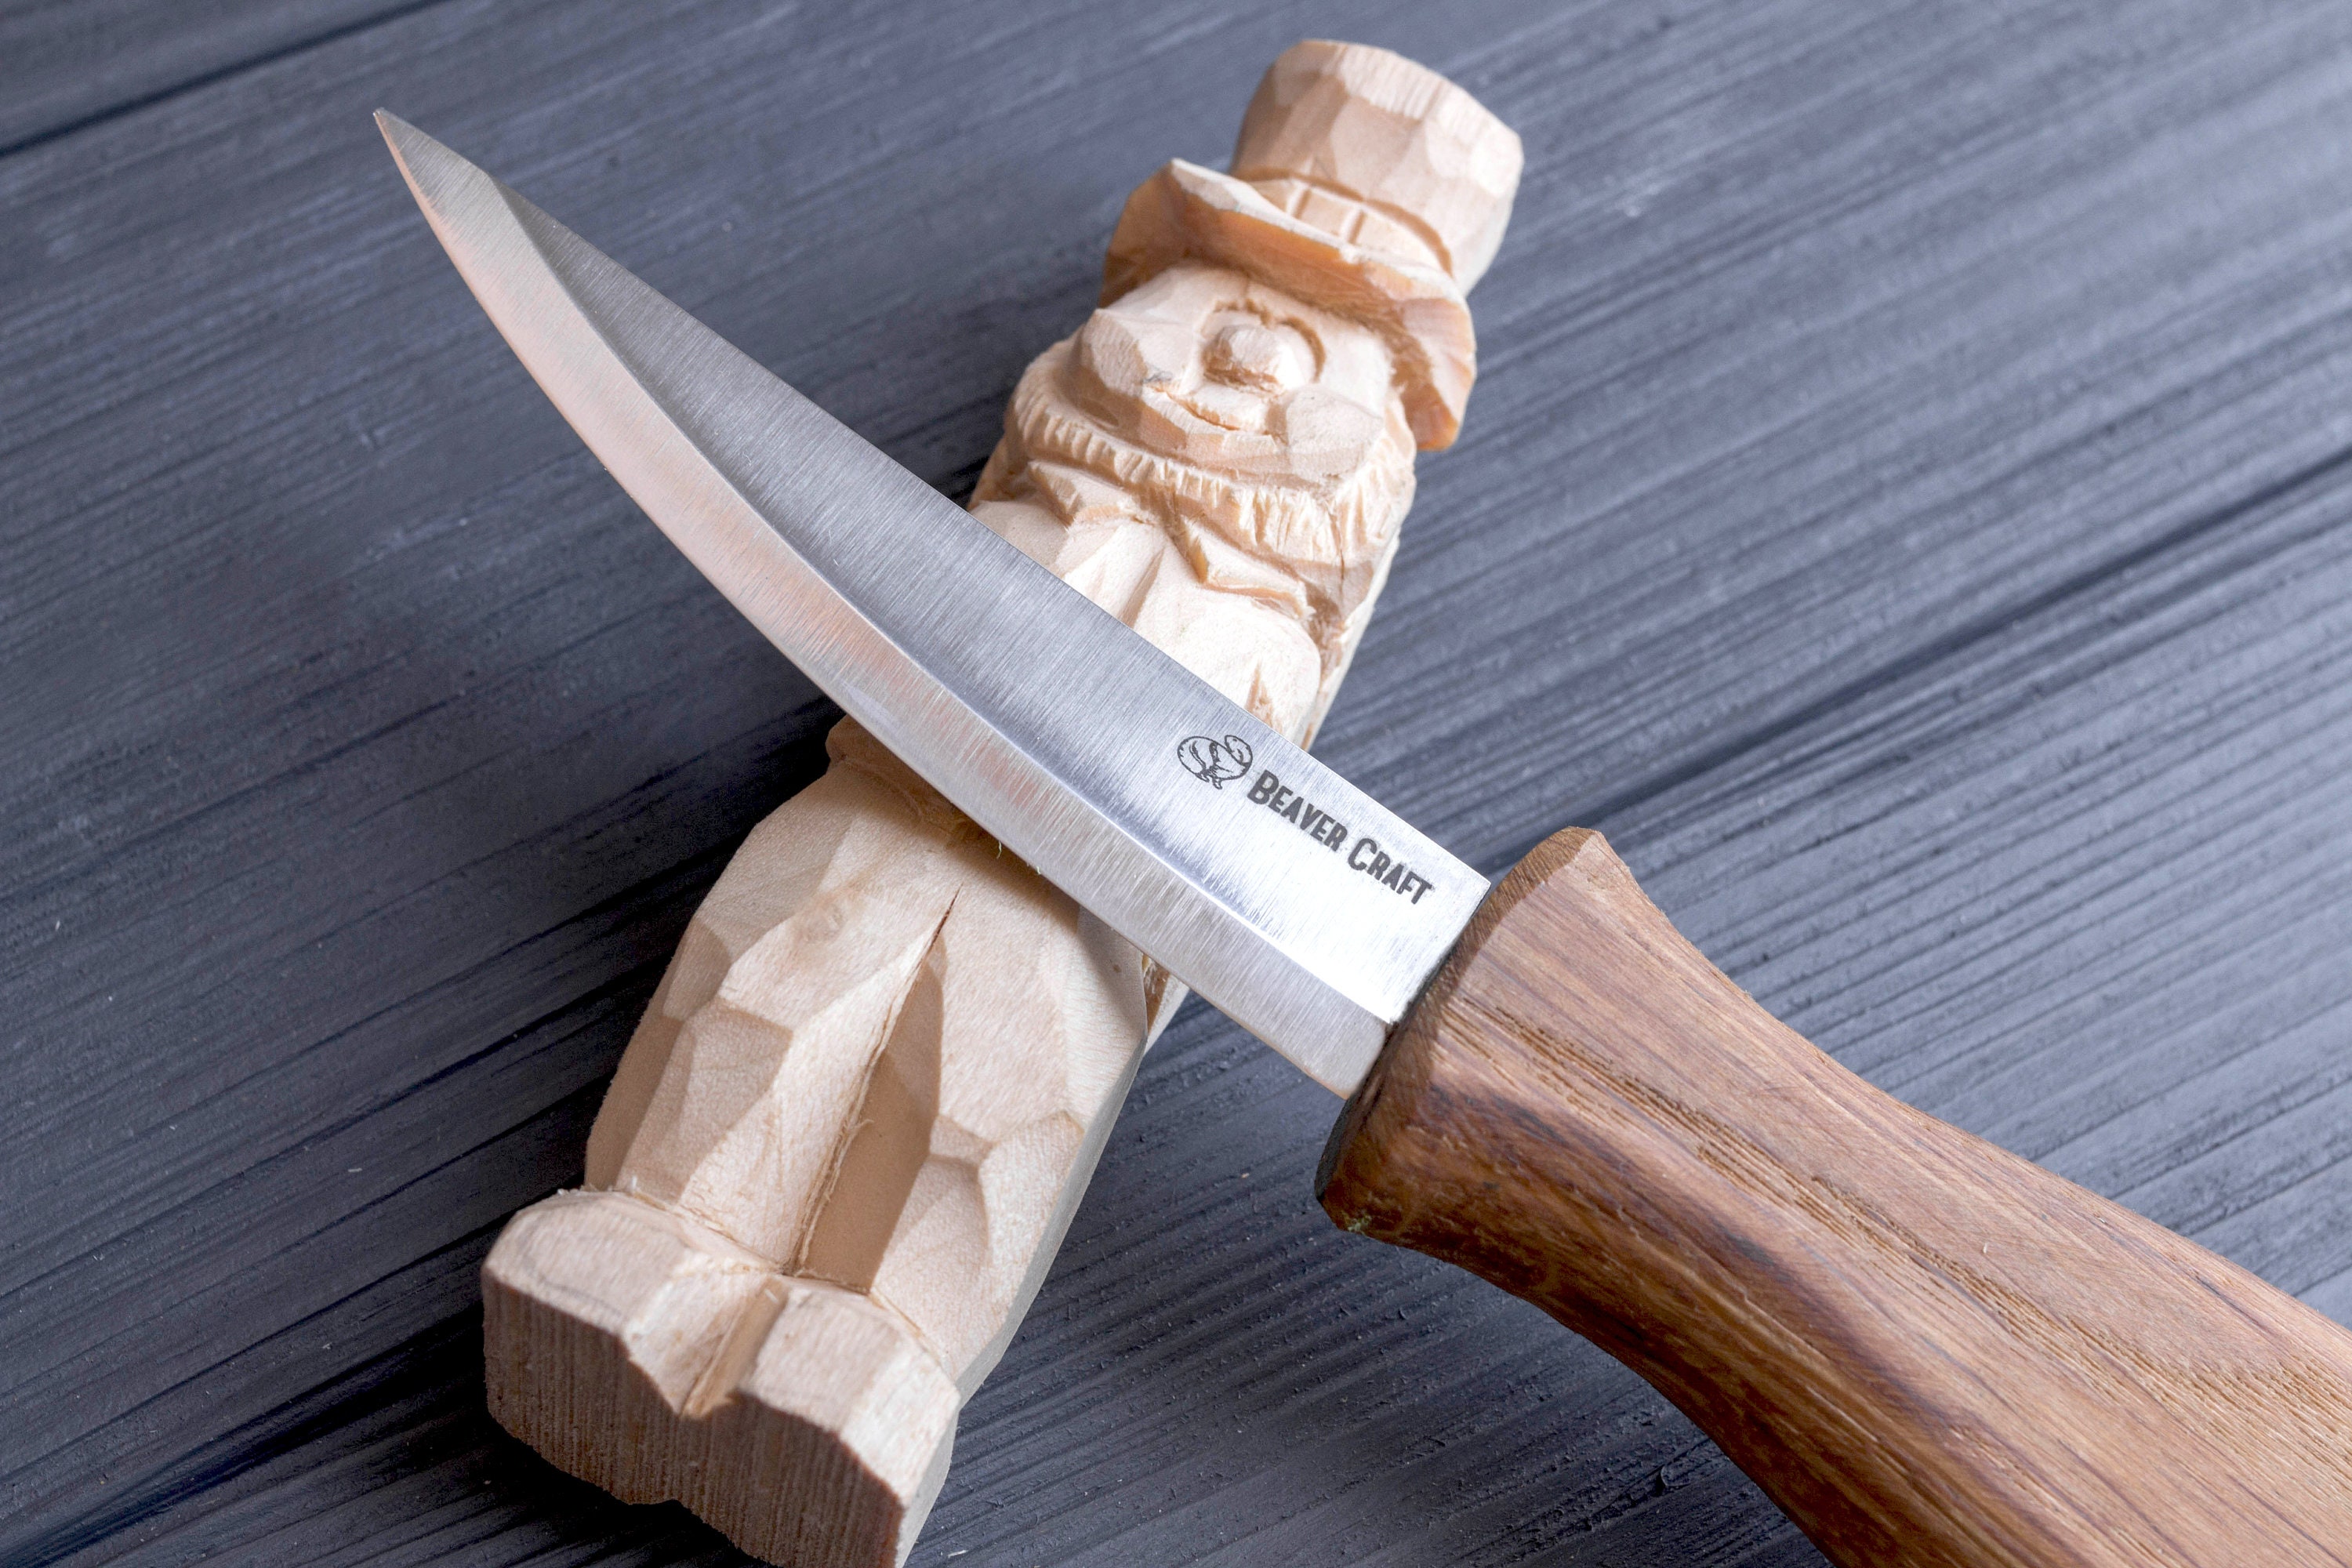 Stryi Sloyd Knife, 2-1/4 – Bigfoot Carving Tools, LLC